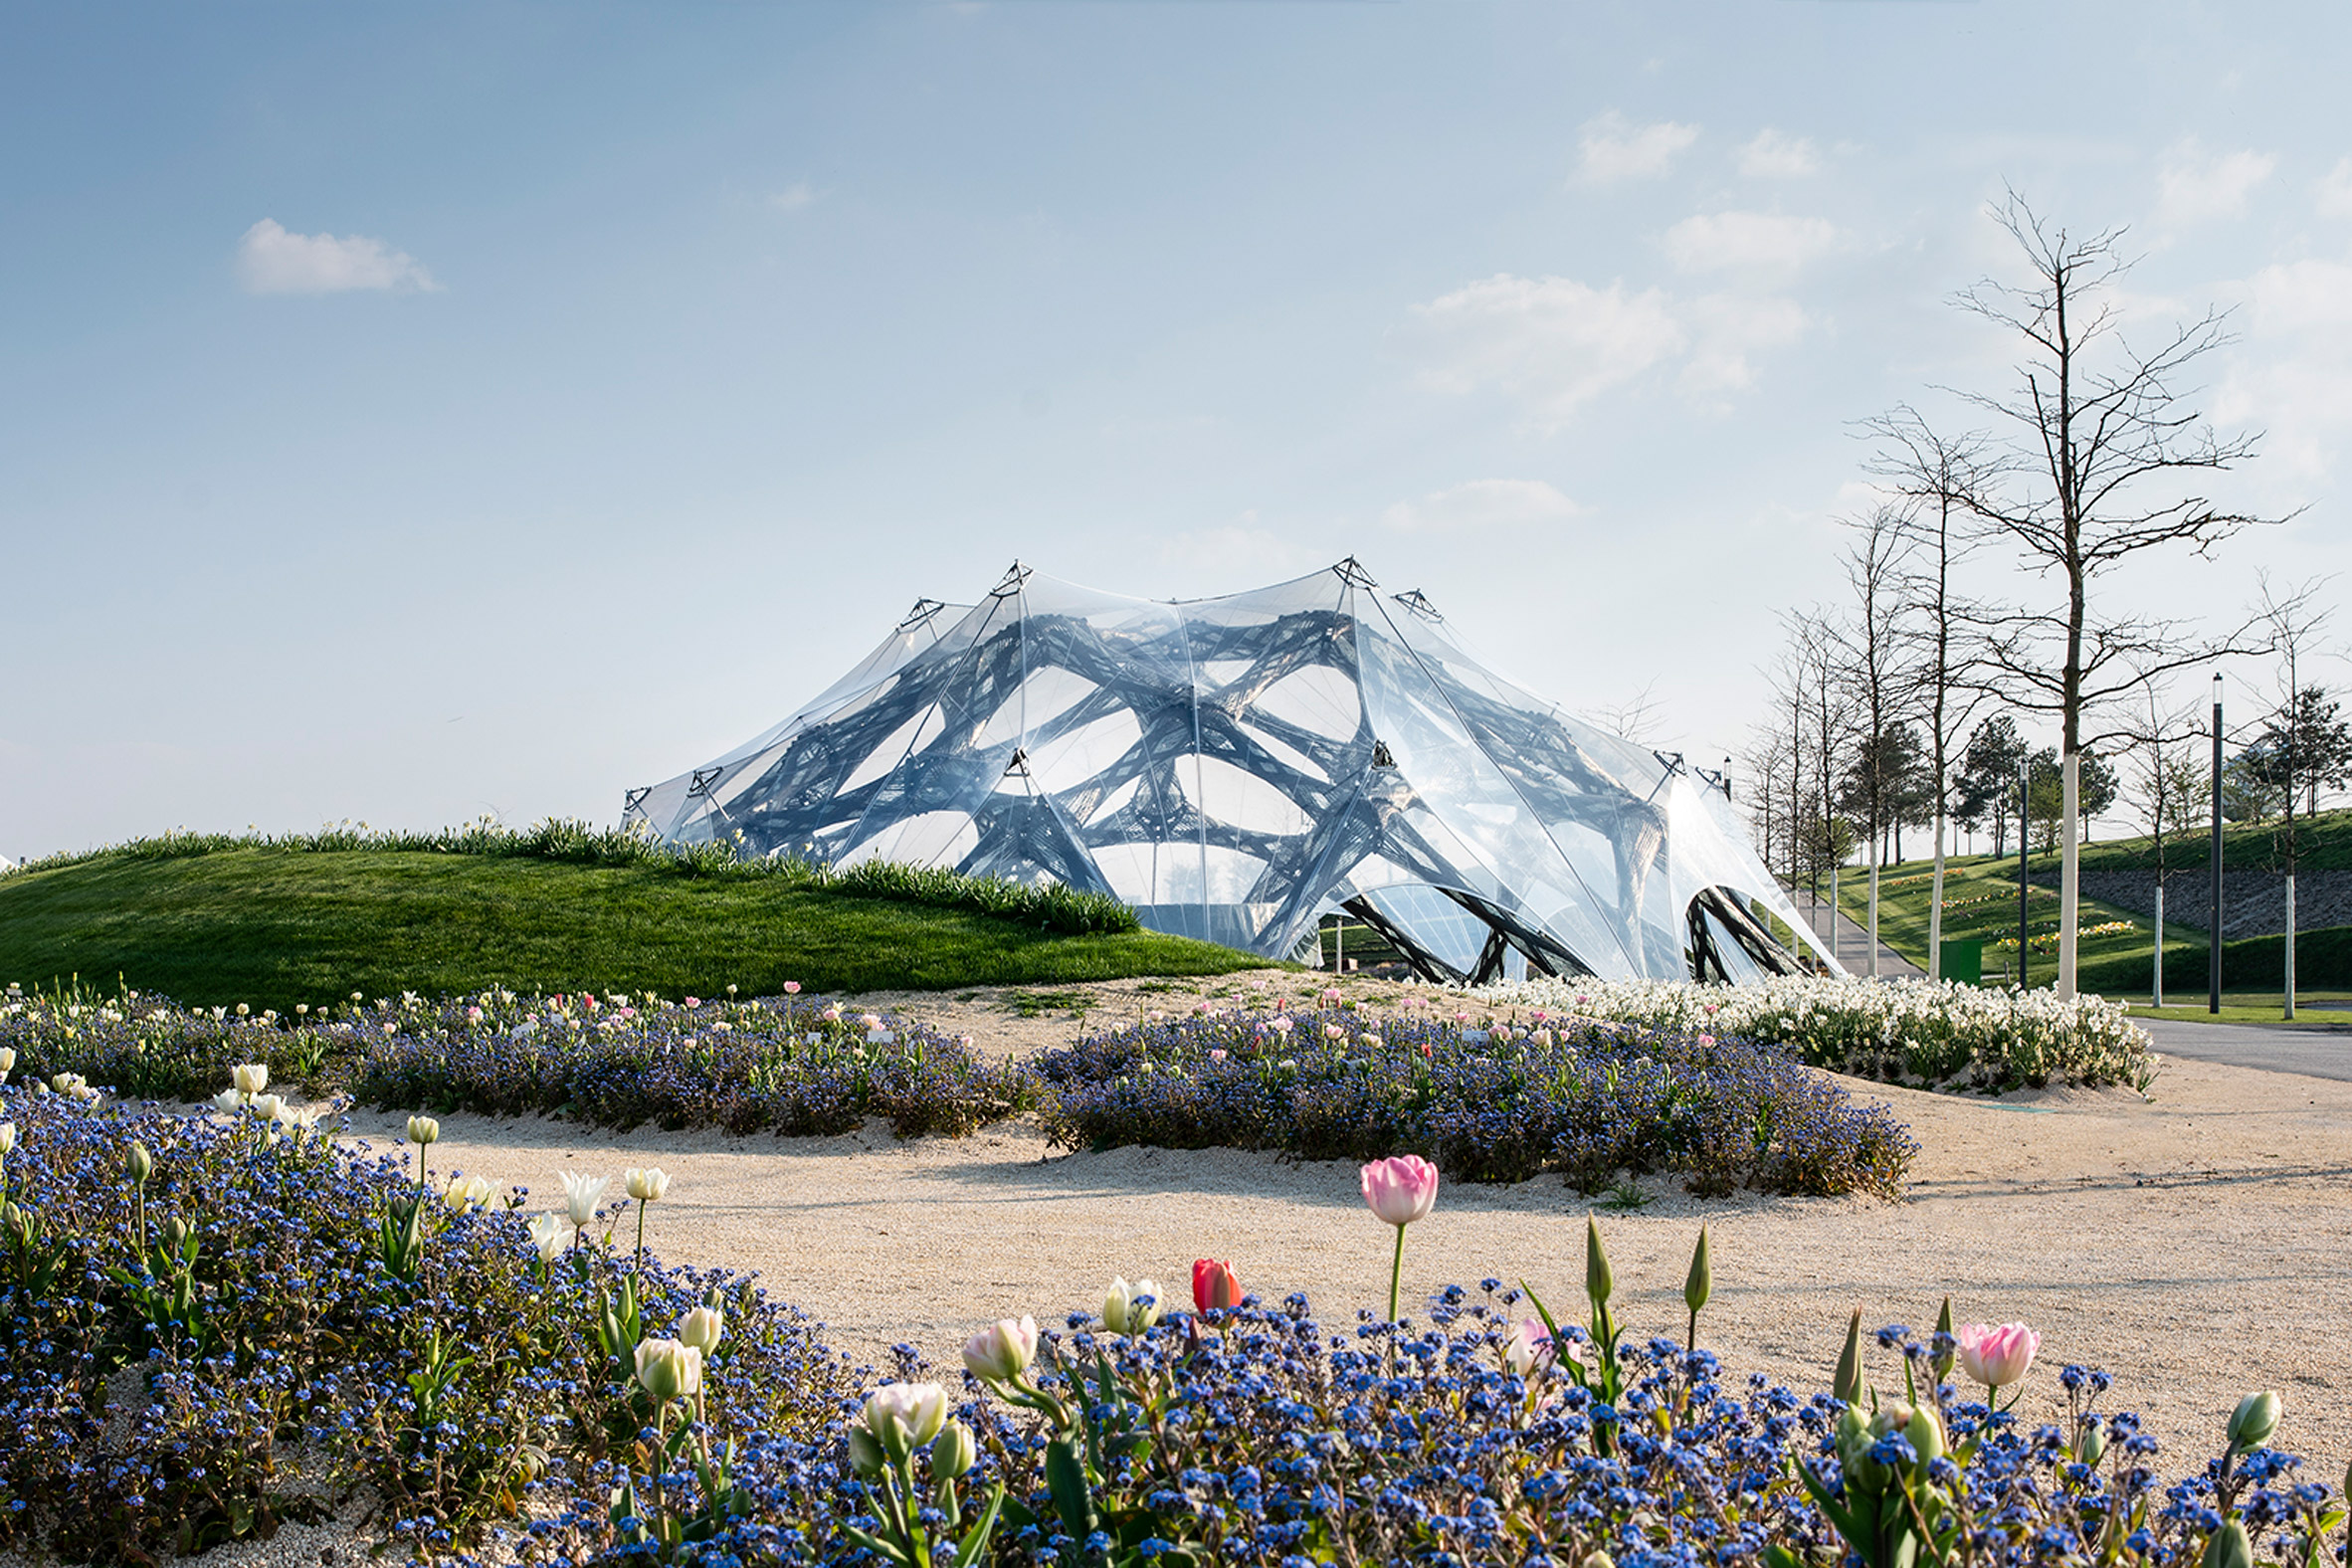 University of Stuttgart creates biomimetic pavilions for the Bundesgartenschau horticultural show in Germany